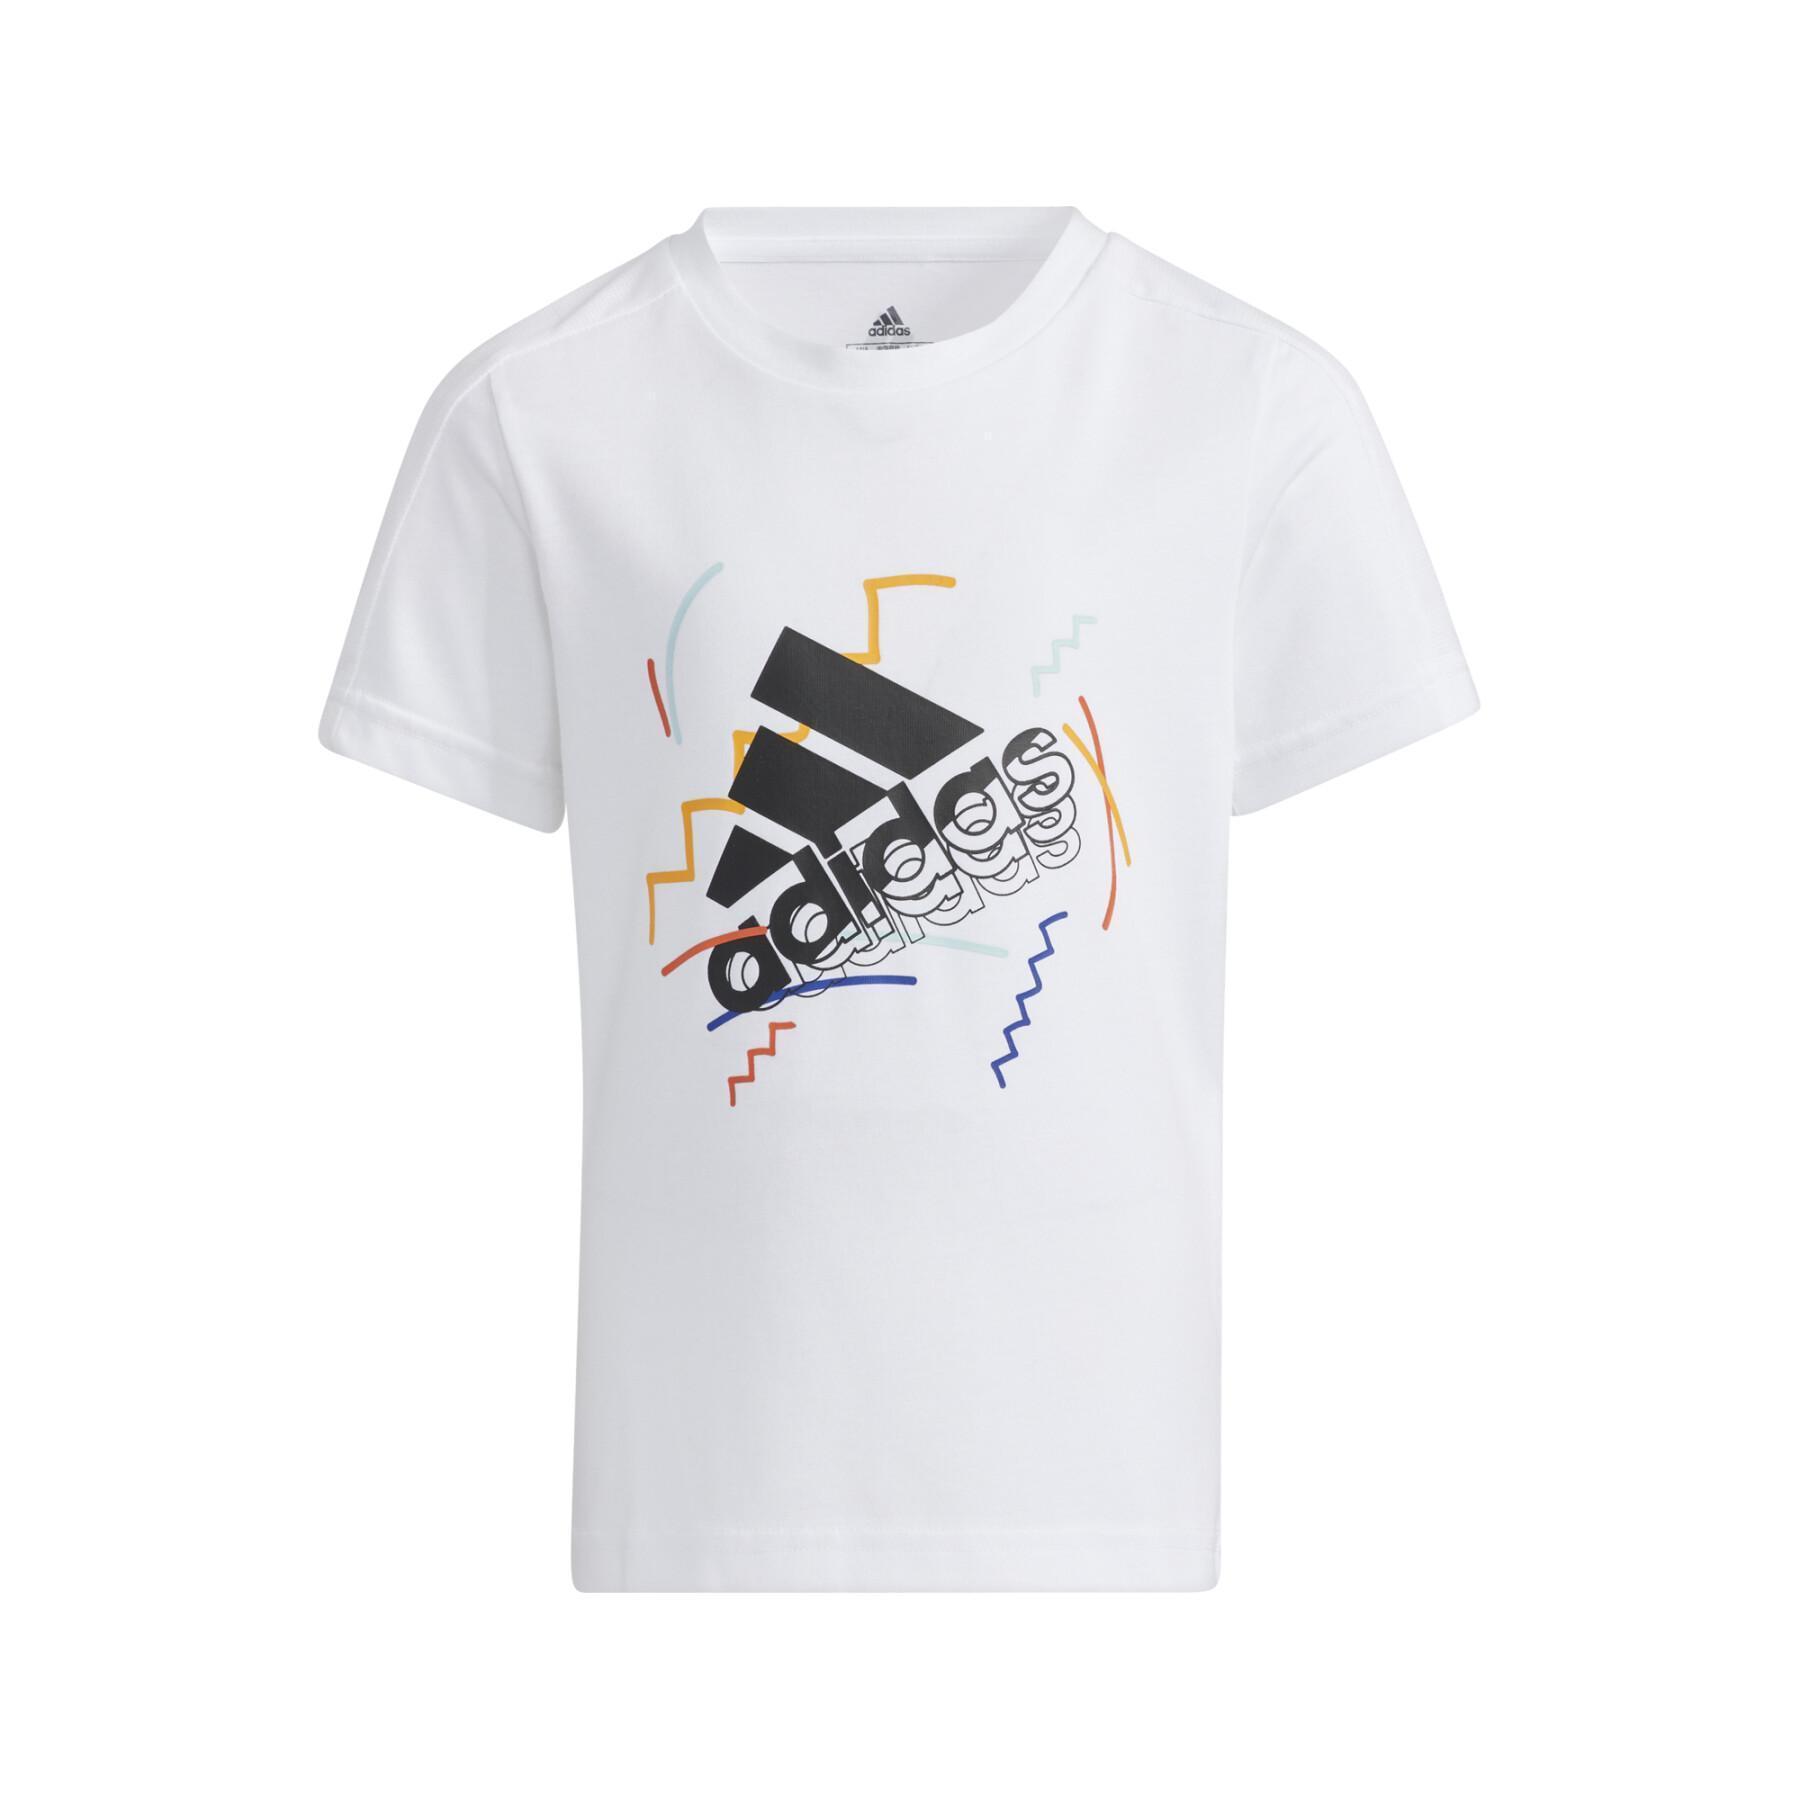 Koszulka dziecięca adidas Coton